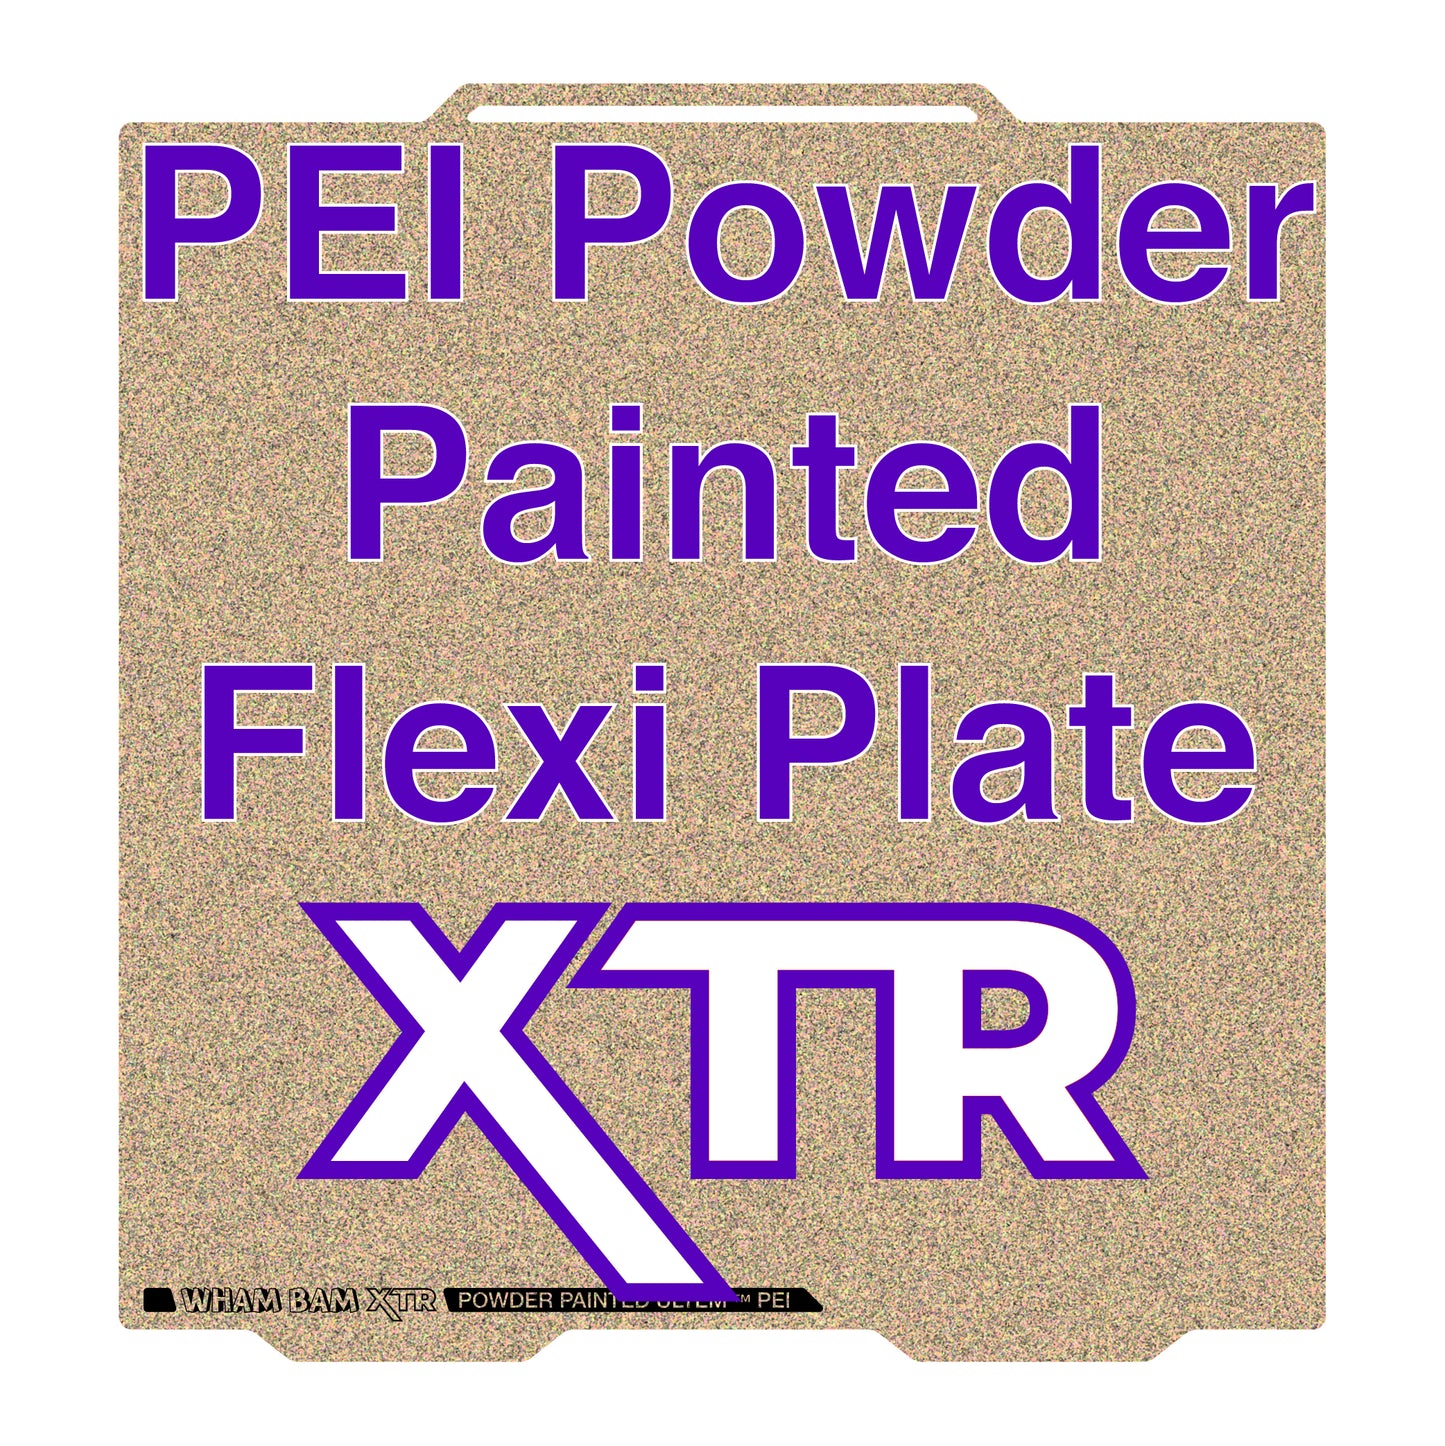 XTR Powder Painted PEI Flexi Plate - 365 x 365 - Prusa XL